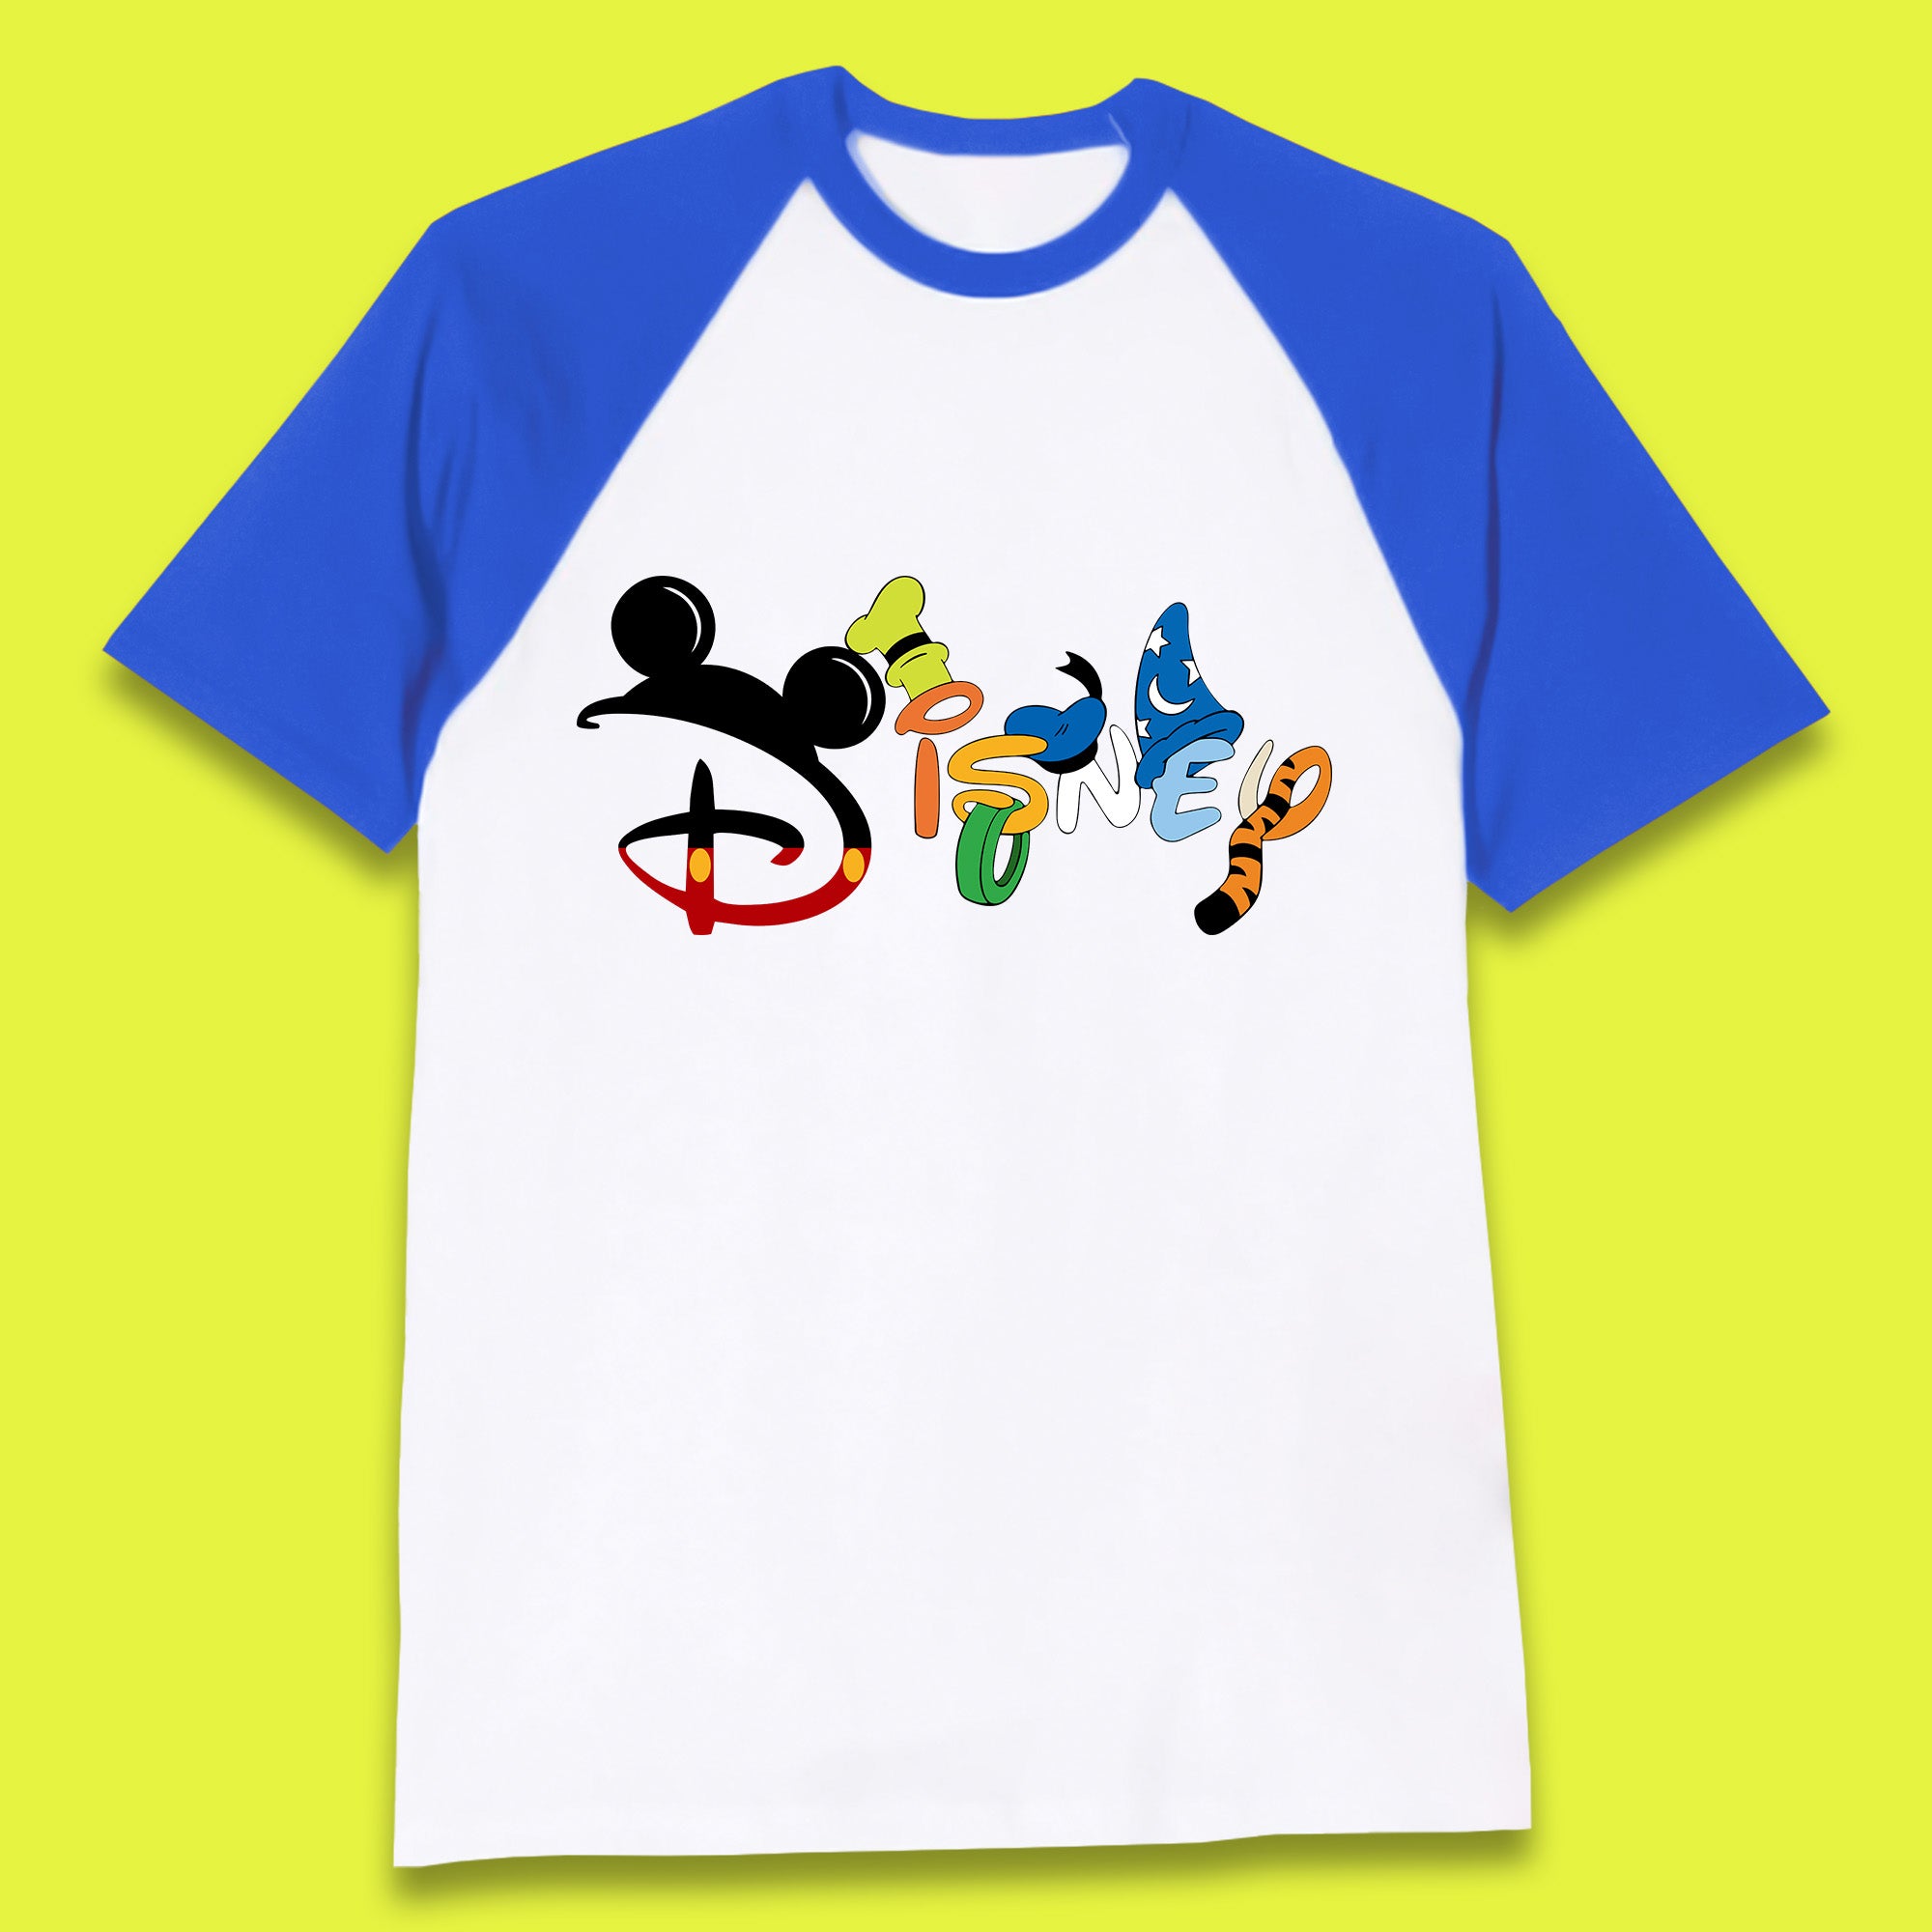 Disney Club Cartoon Characters Mickey Mouse Minnie Mouse Donald Duck Pluto Goofy Sorcerer Mickey Hat Tigger Disney World Trip Baseball T Shirt